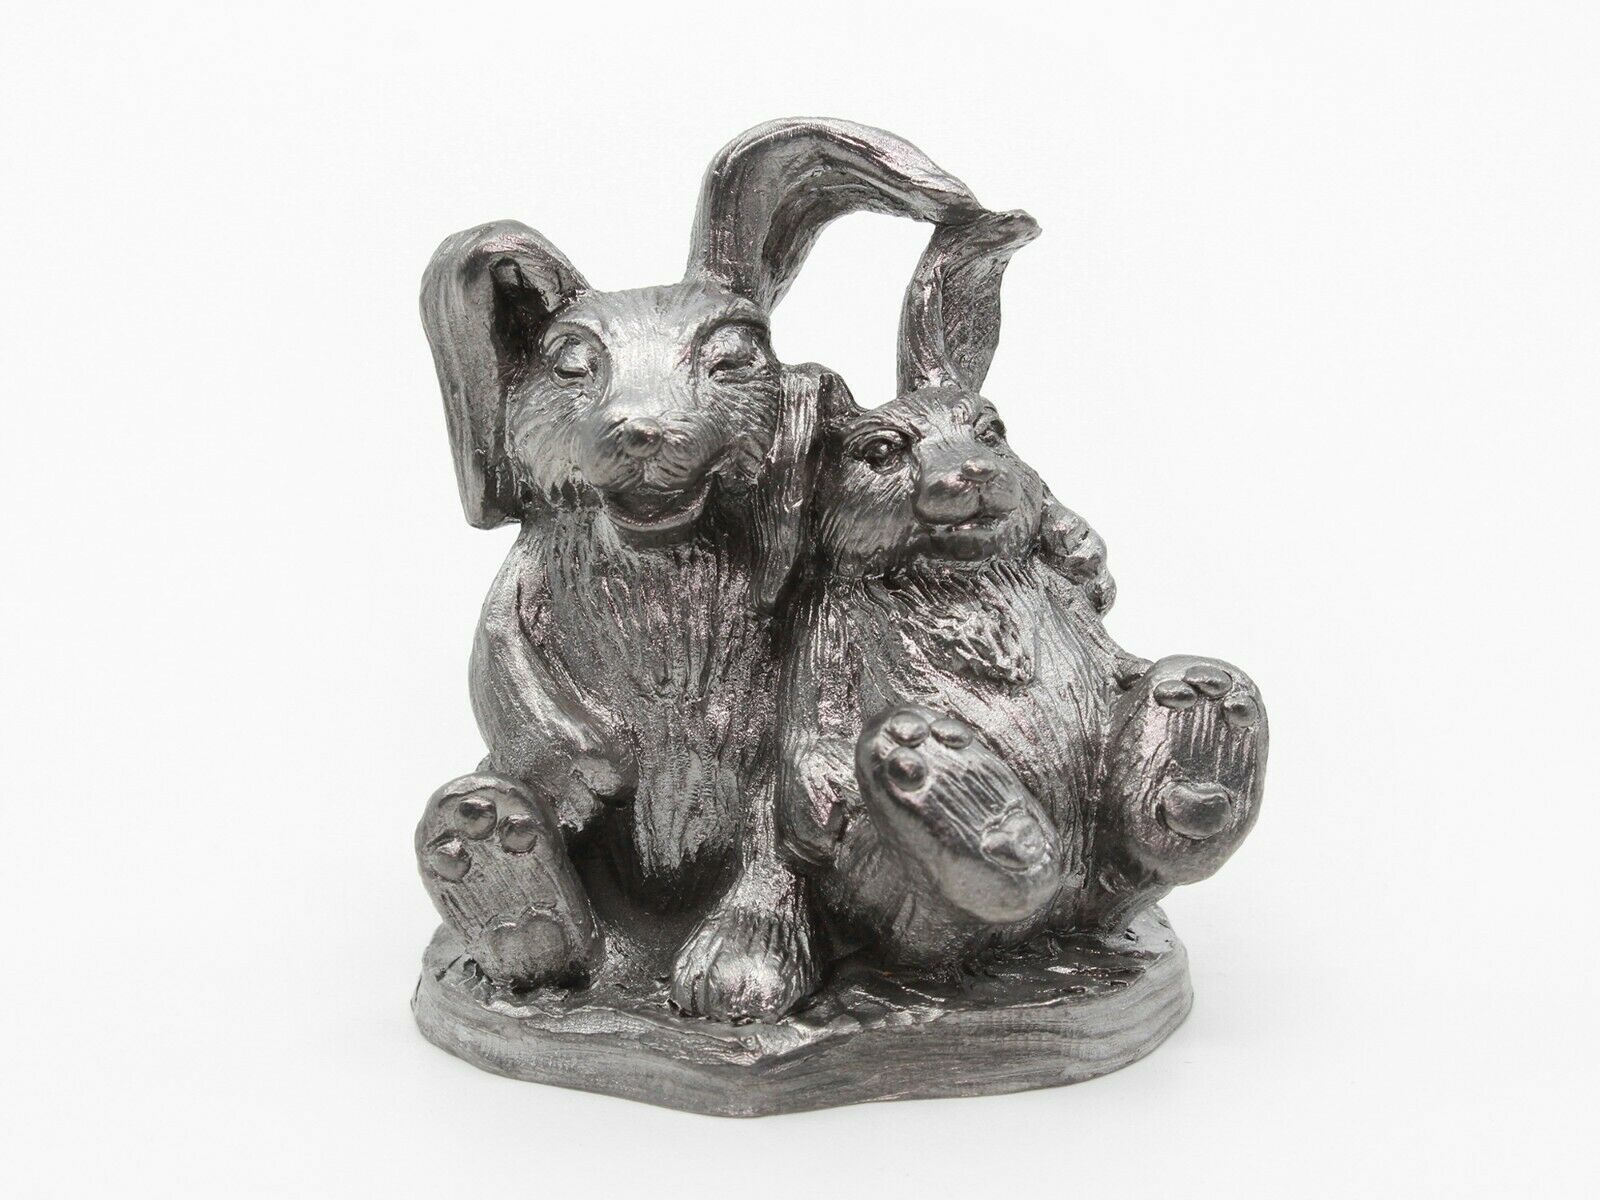 Rabbits - Friendship Gift Of Love - 2.25" Pewter Figurine - 1998 Michael Ricker